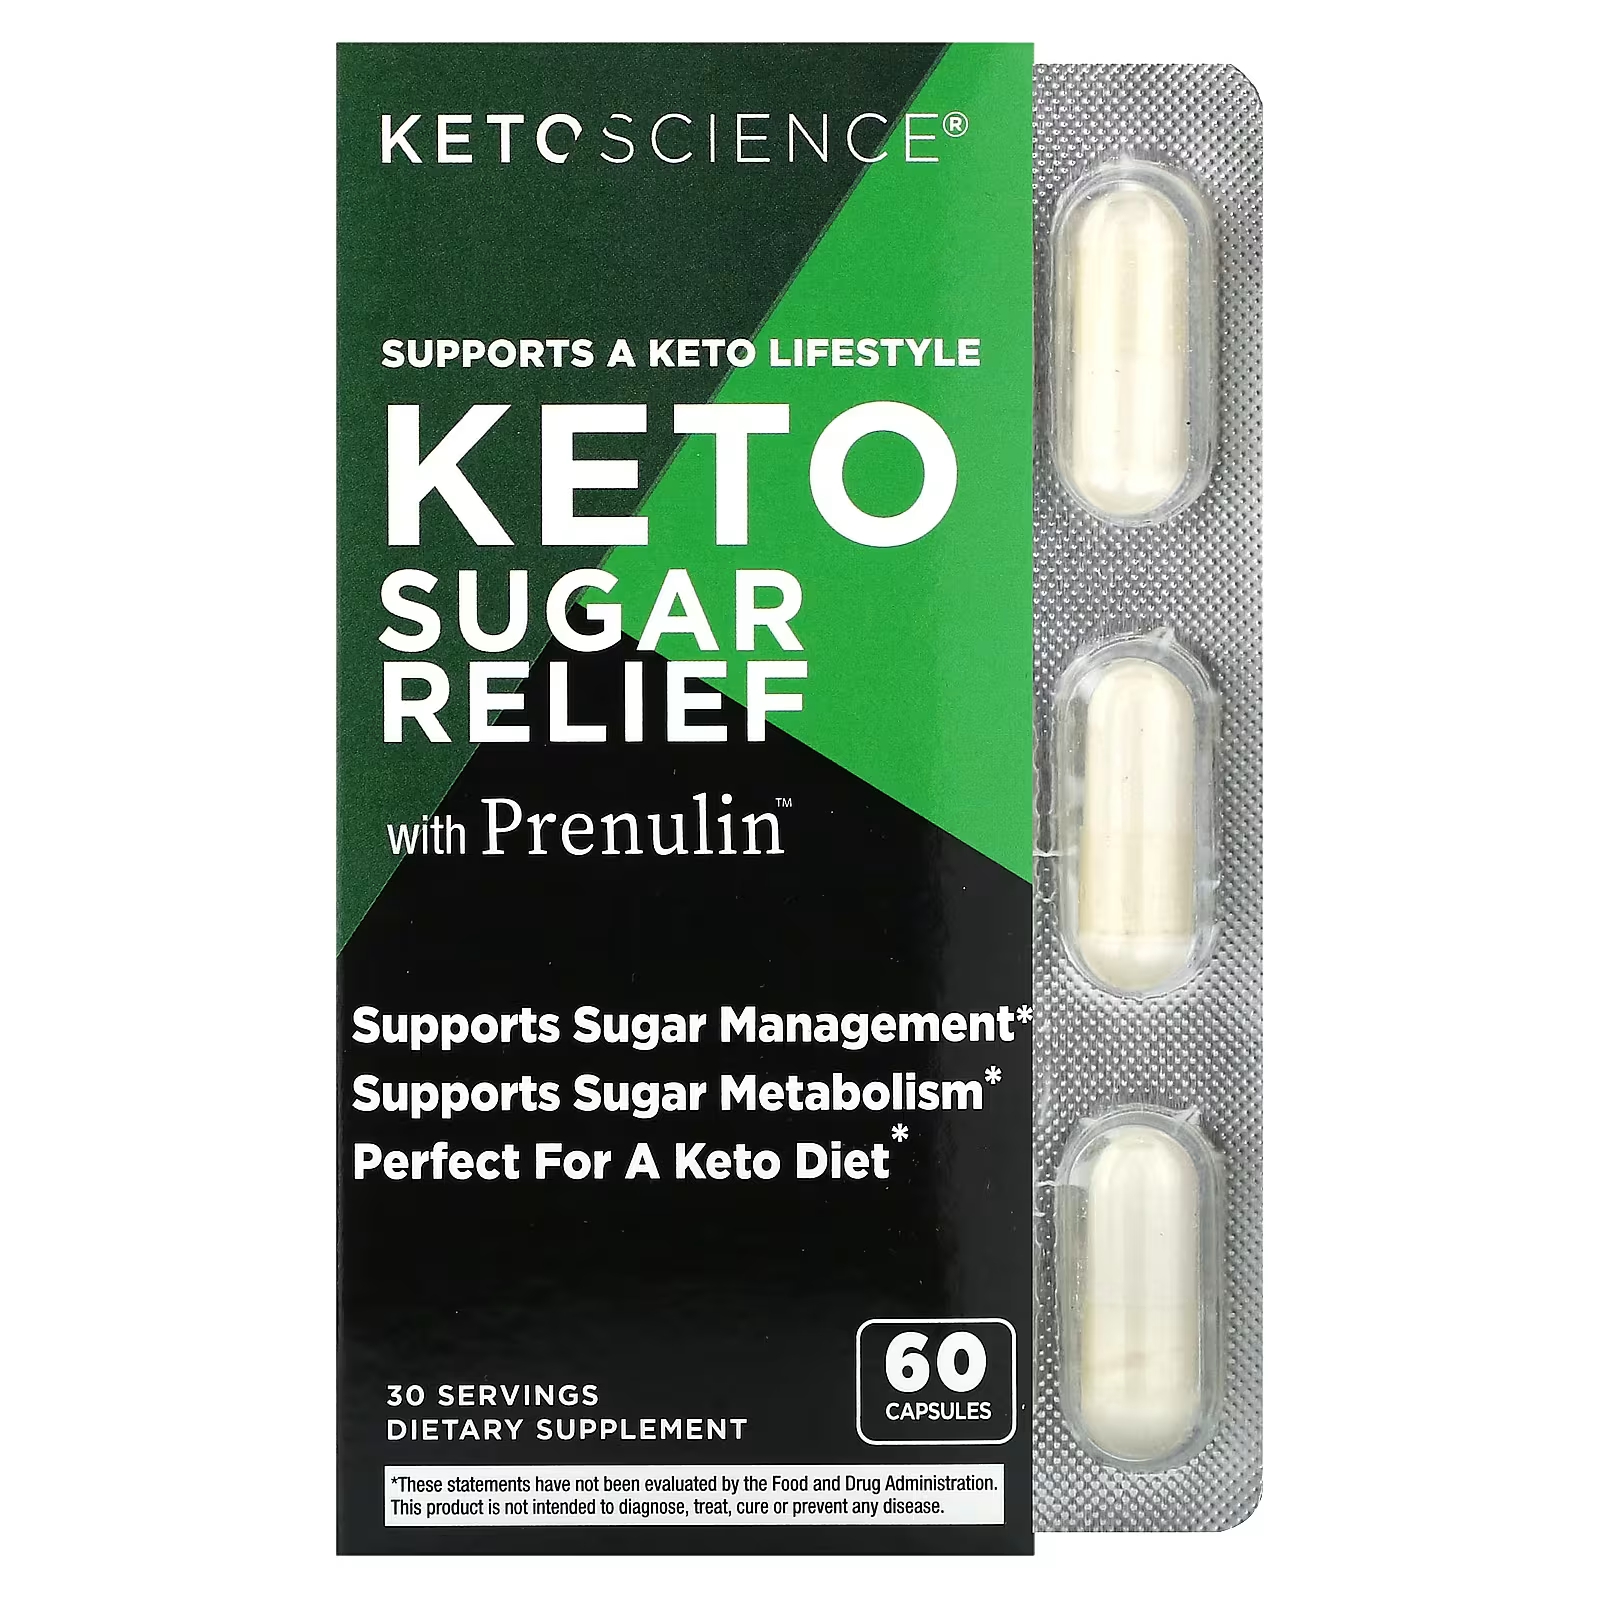 Пищевая добавка Keto Science Keto Sugar Relief с пренулином, 60 капсул